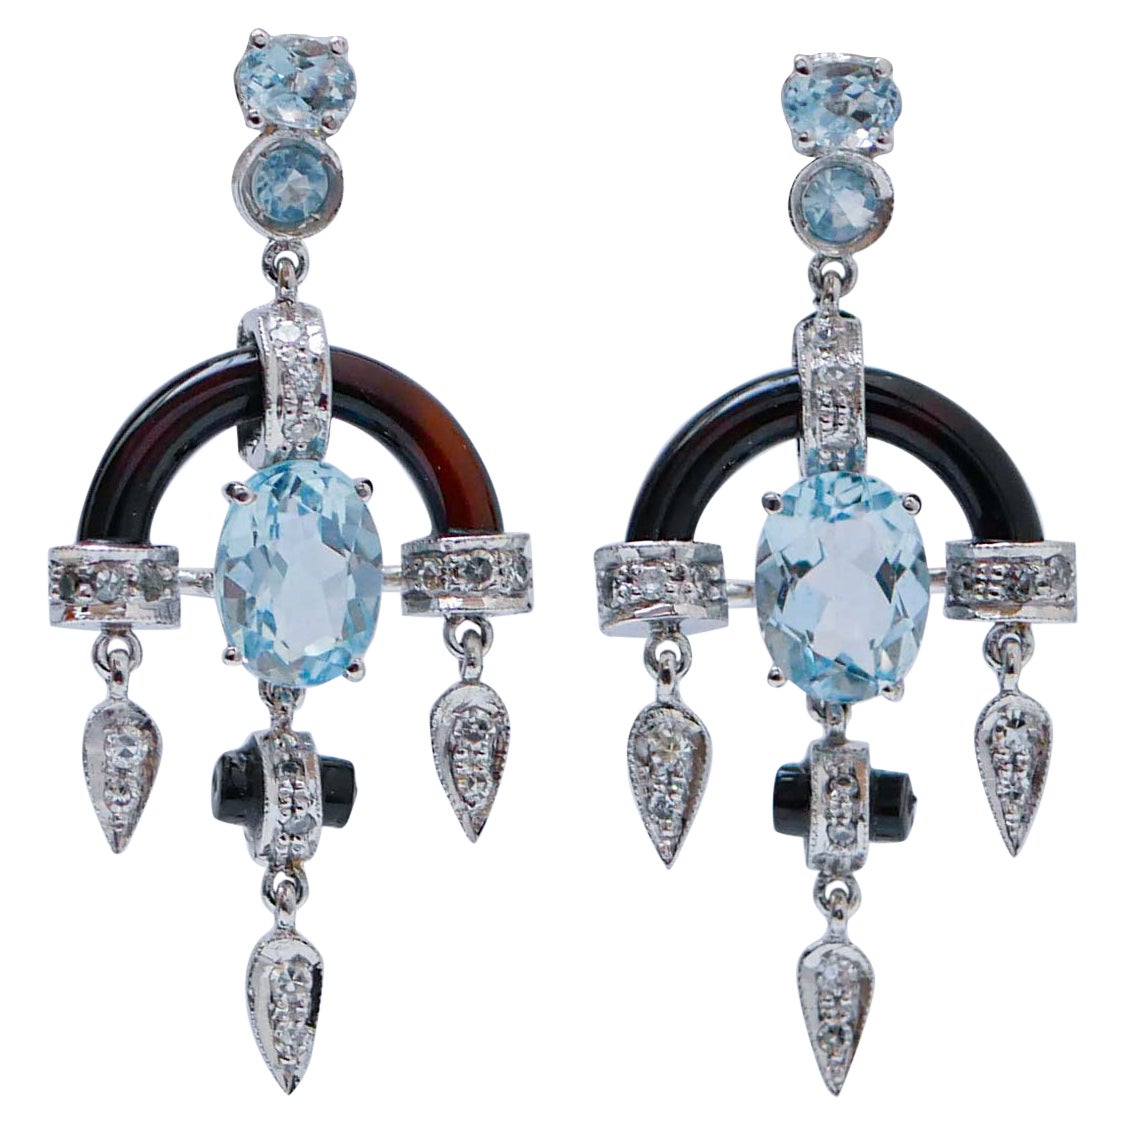 Aquamarine Colour Topazs, Diamonds, Onyx, Platinum Dangle Earrings.